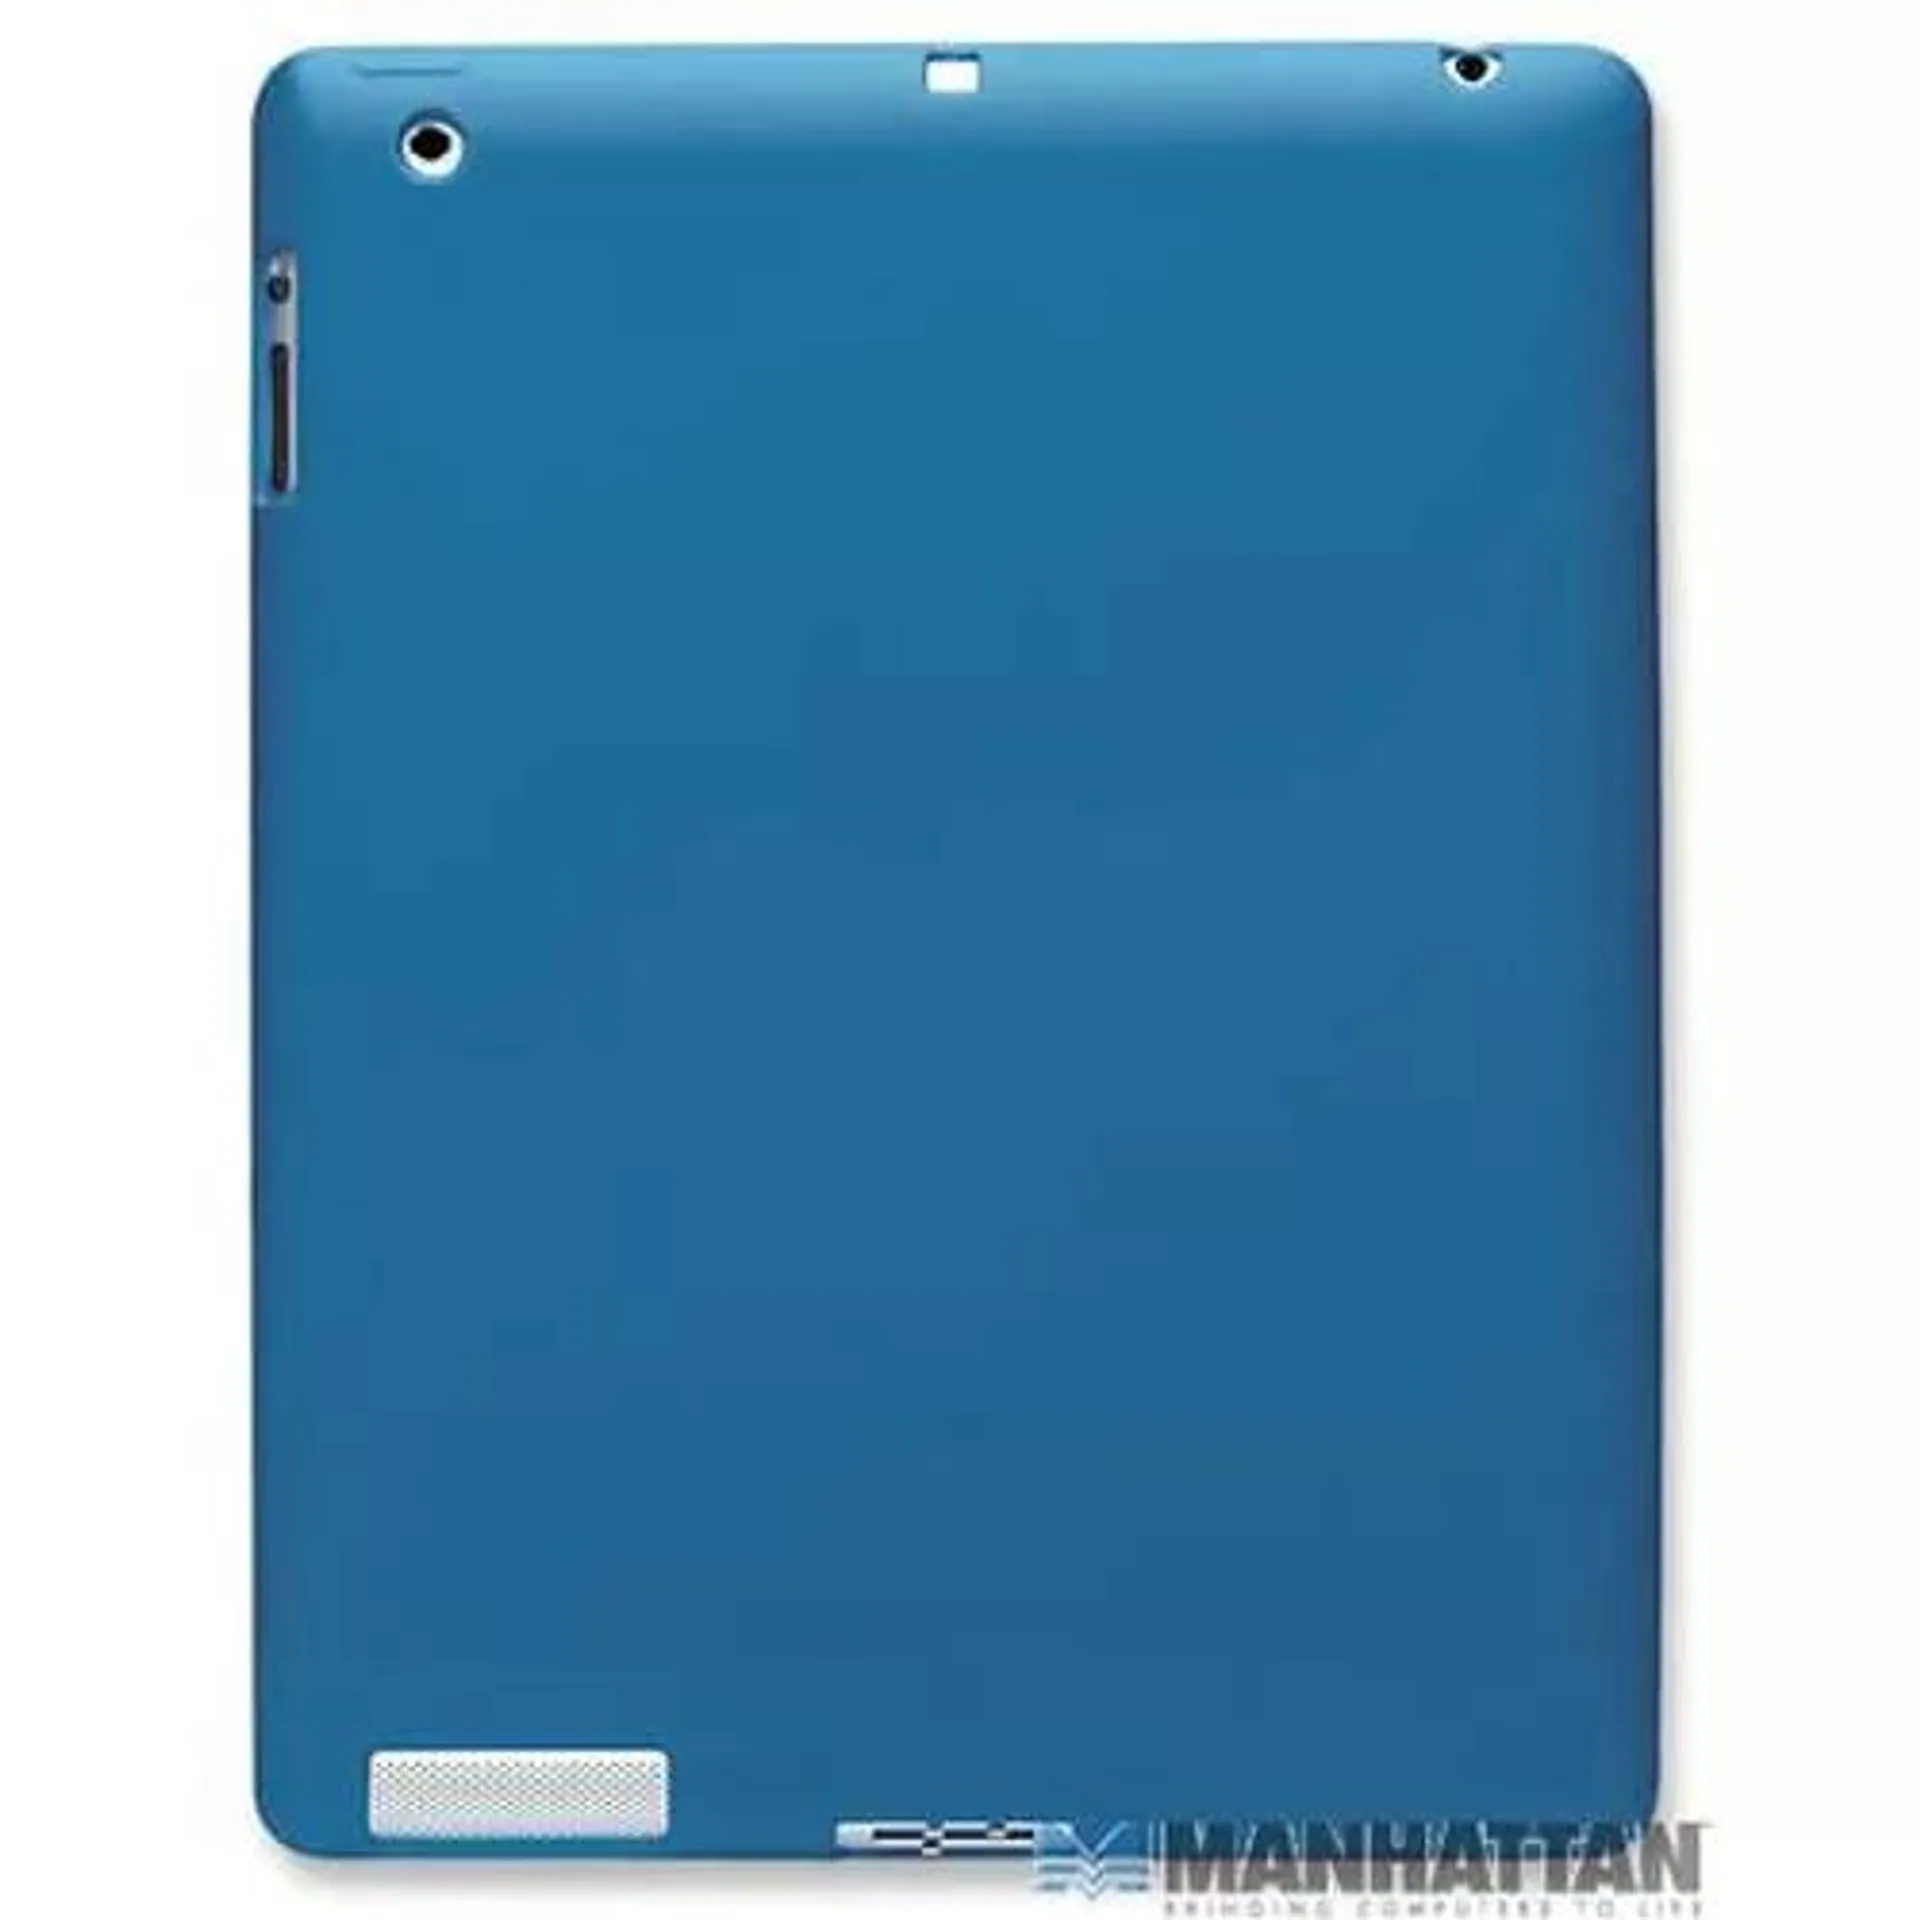 Carcasa Protectora iPad Azul 450034